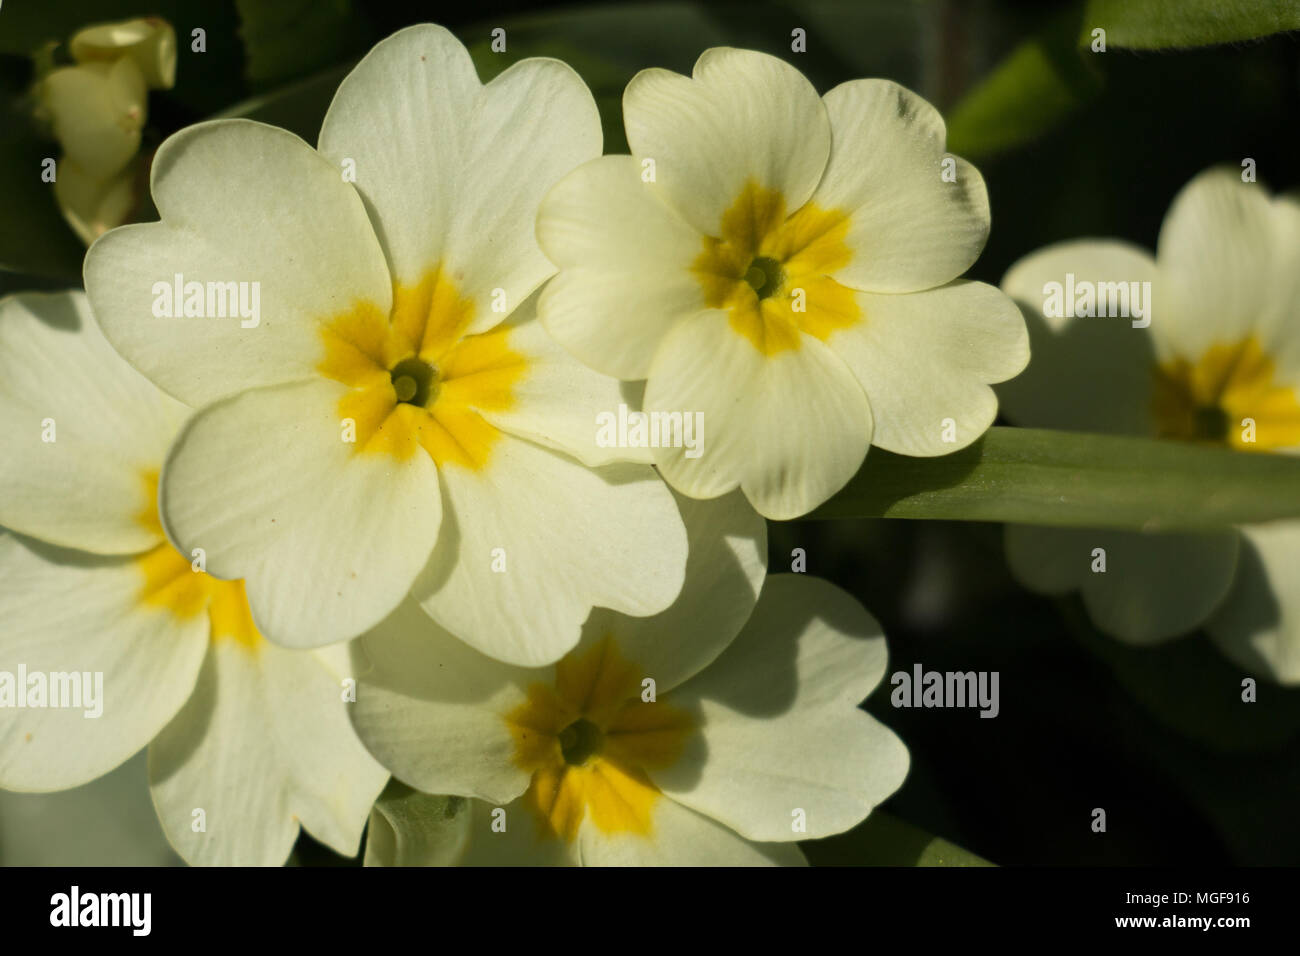 Bright yellow primrose flowers, Primula vulgaris, blooming in the spring sunshine Stock Photo